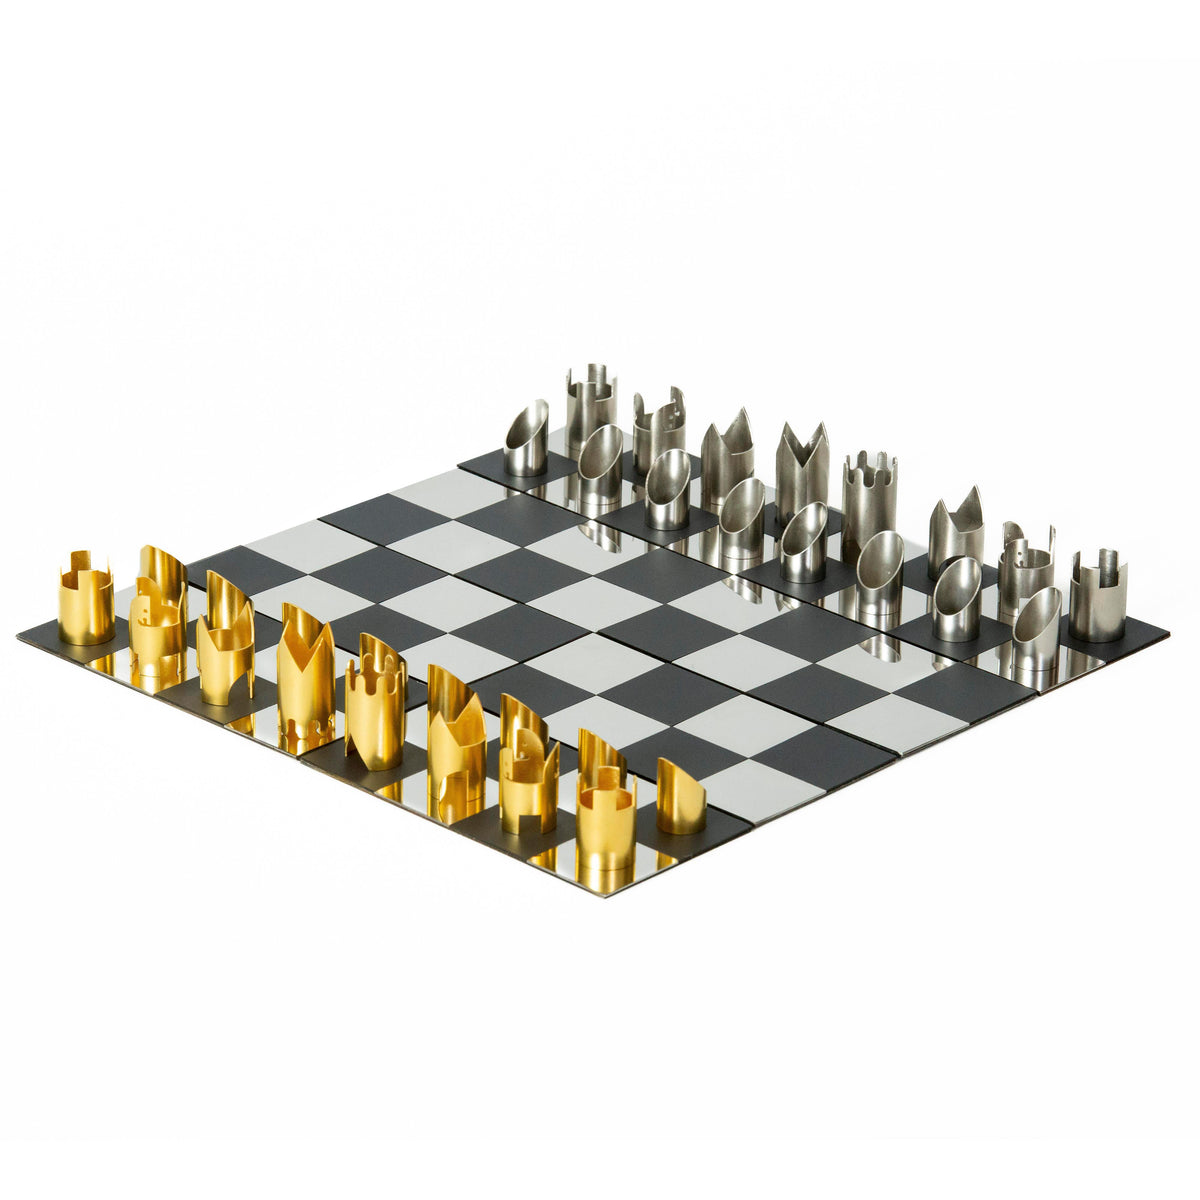 SA - 72 - Single OCR PDF, PDF, World Chess Championships